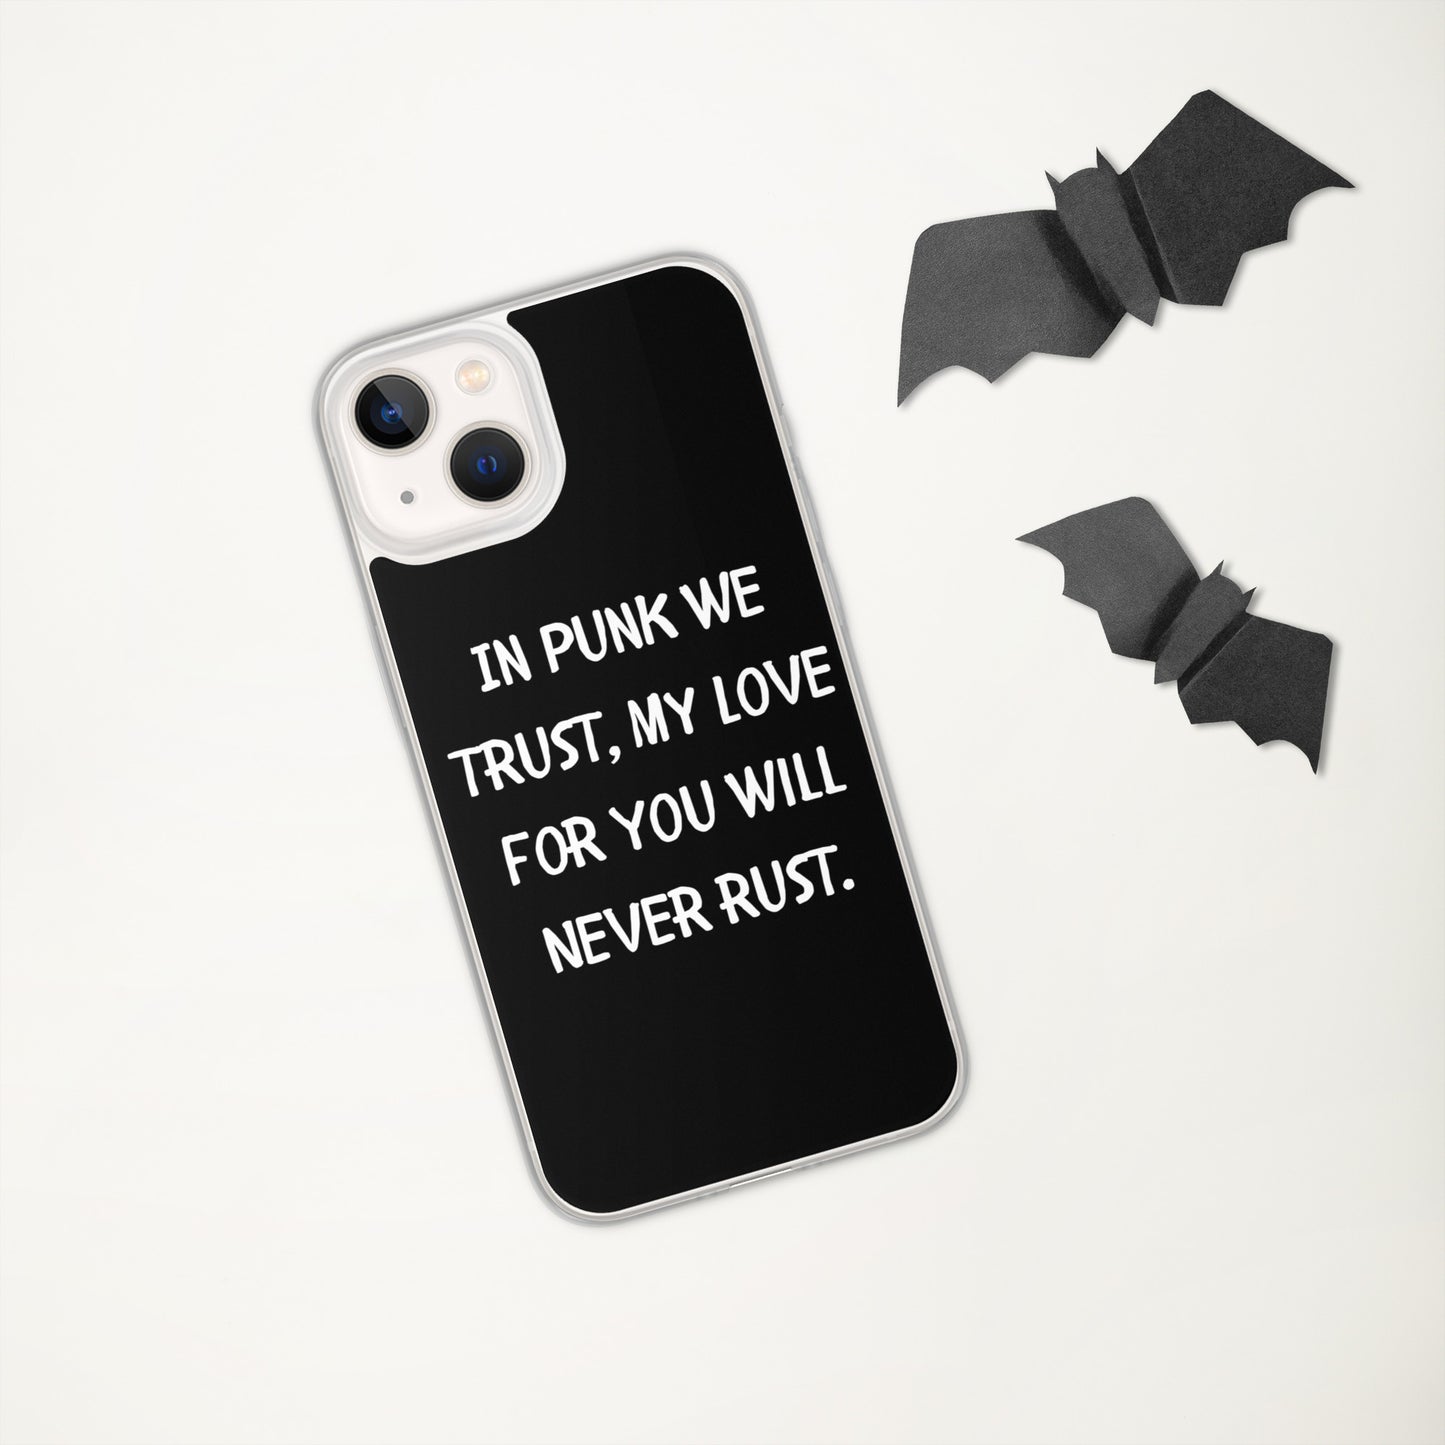 In Punk We Trust Case for iPhone®